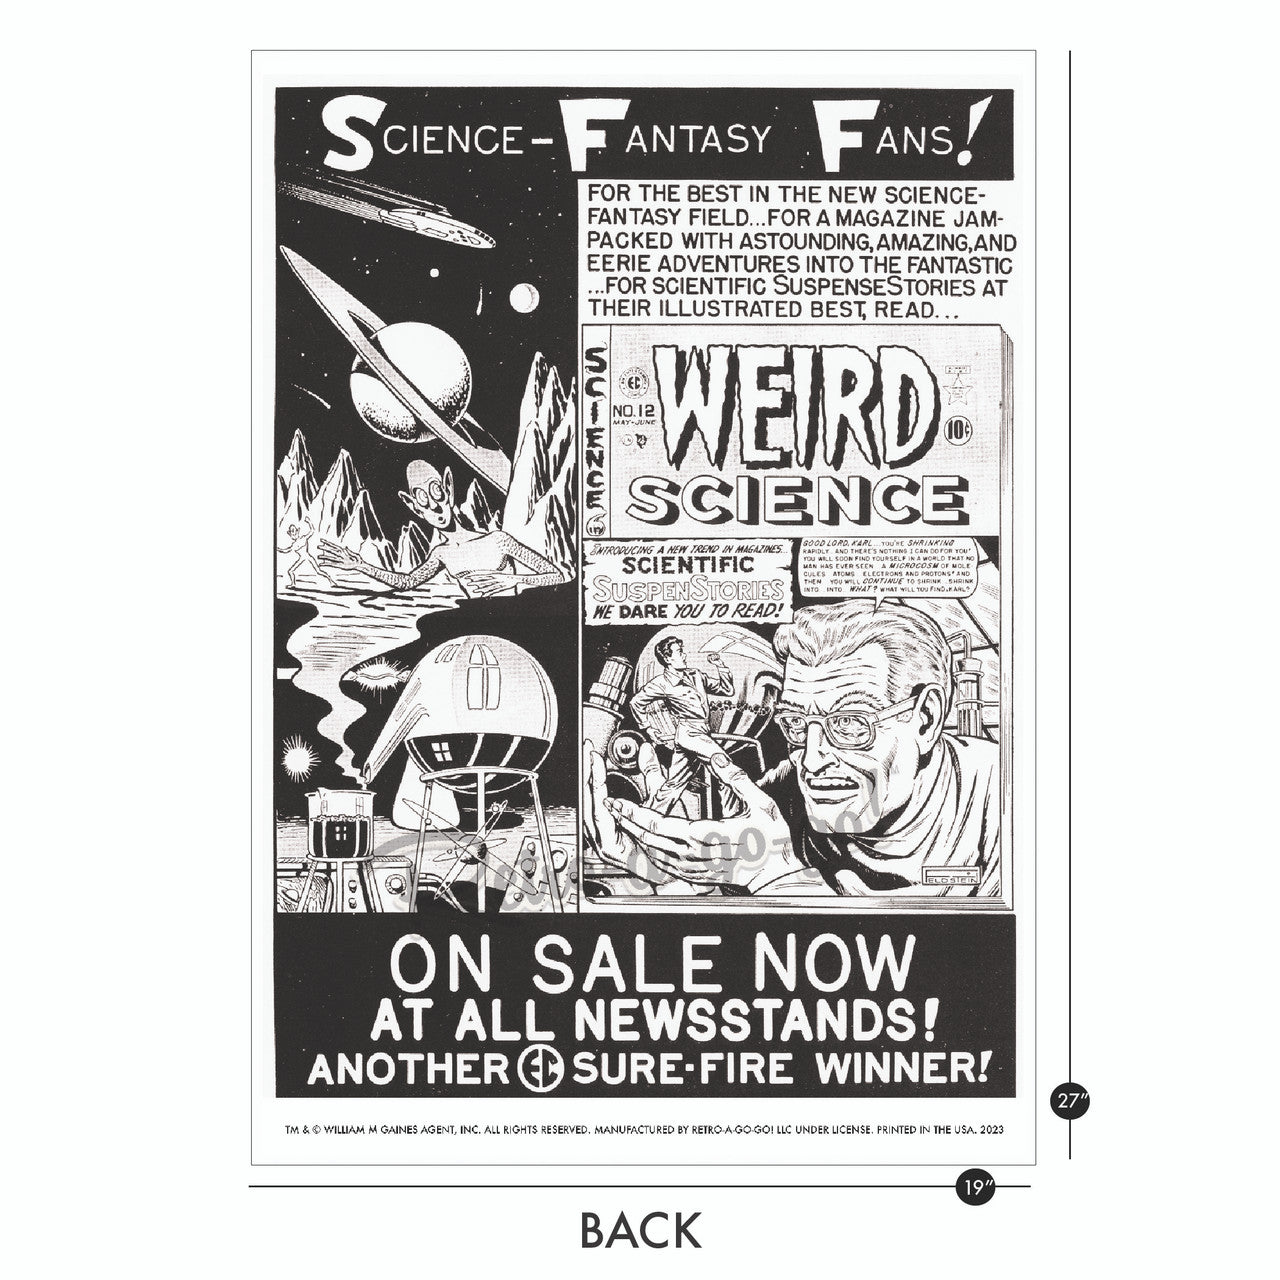 EC Comics Weird Science No. 9 Large Format Print